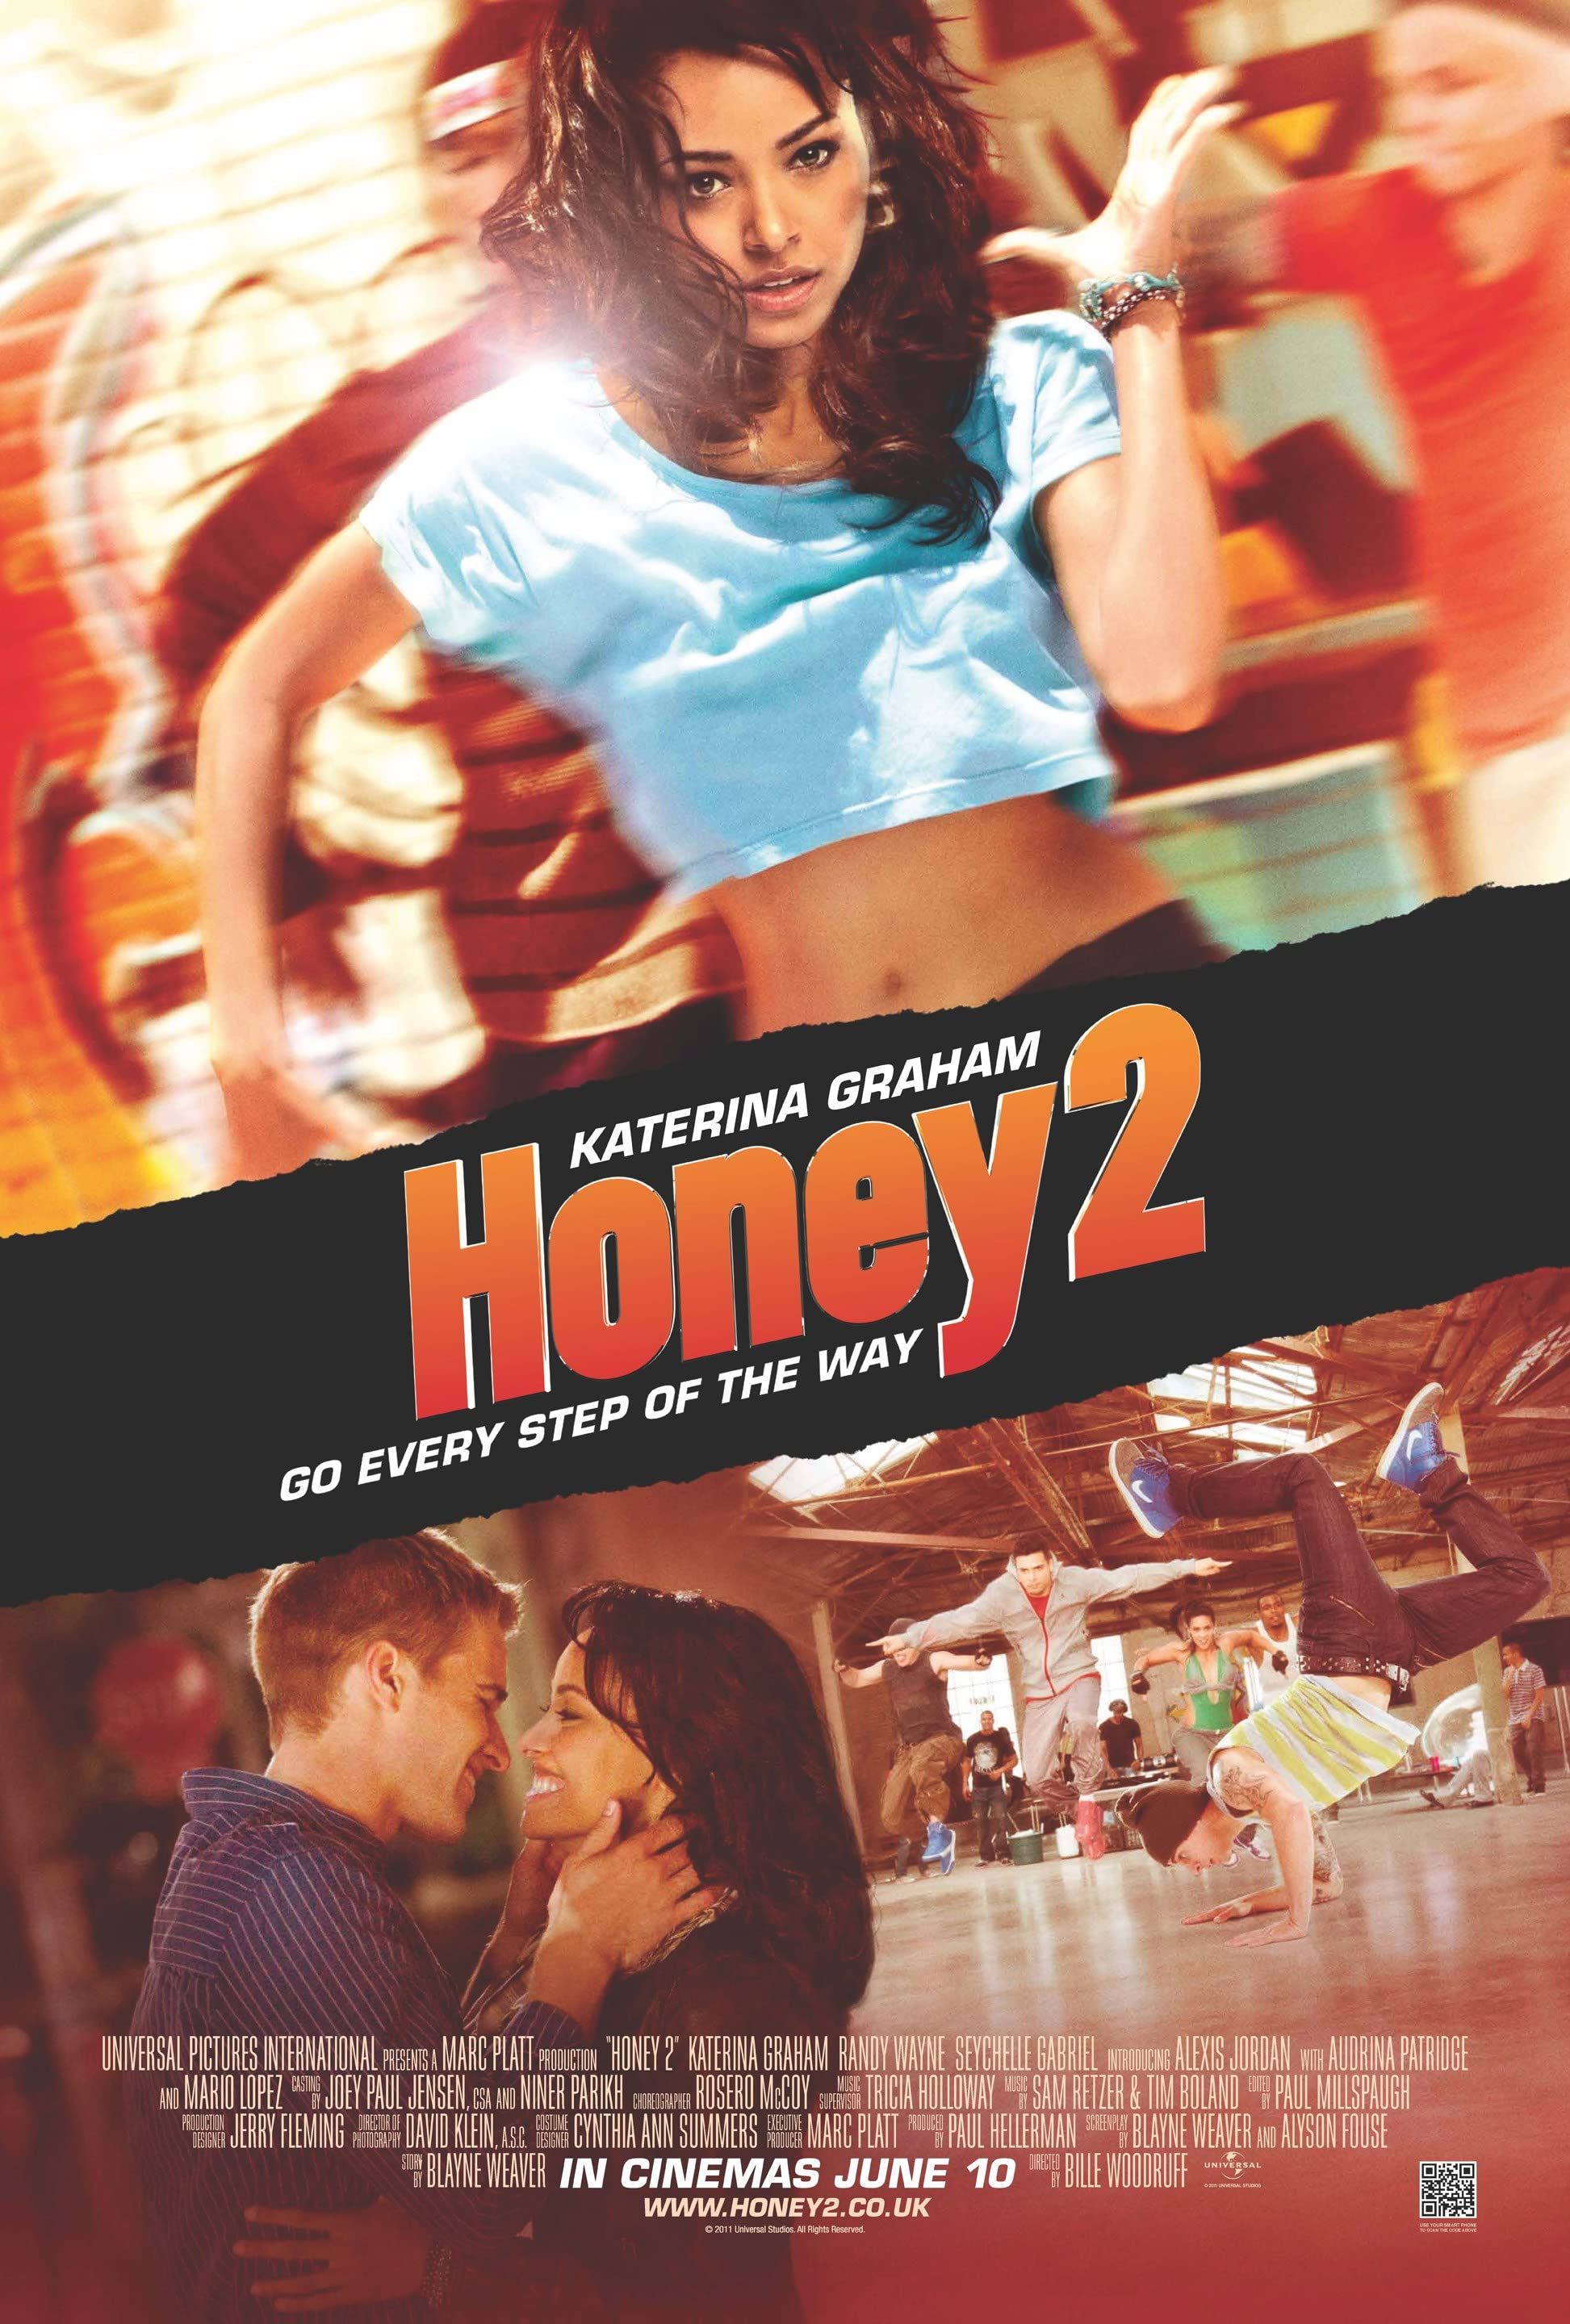 Honey 2 (2011) Hindi Dubbed BluRay download full movie